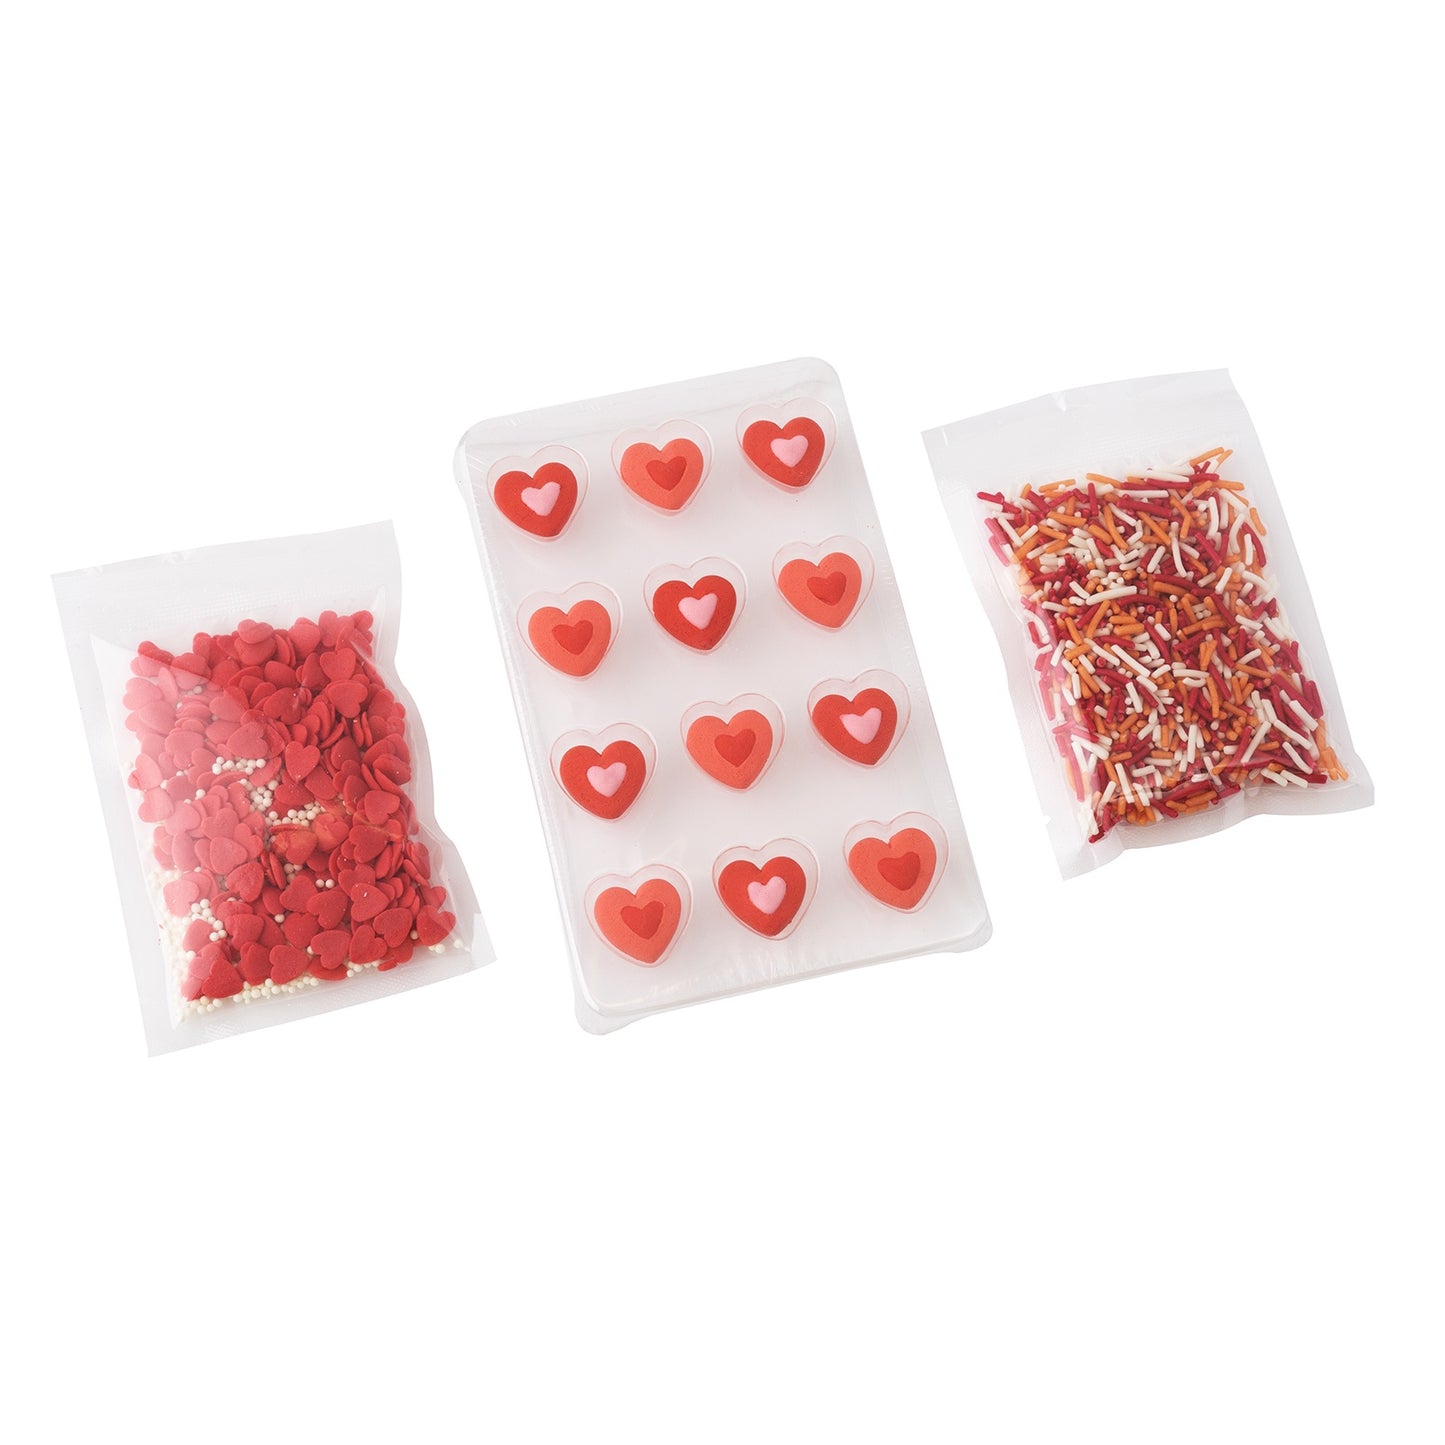 Sweetshop Decorating Kit-Hearts, 13 Pieces